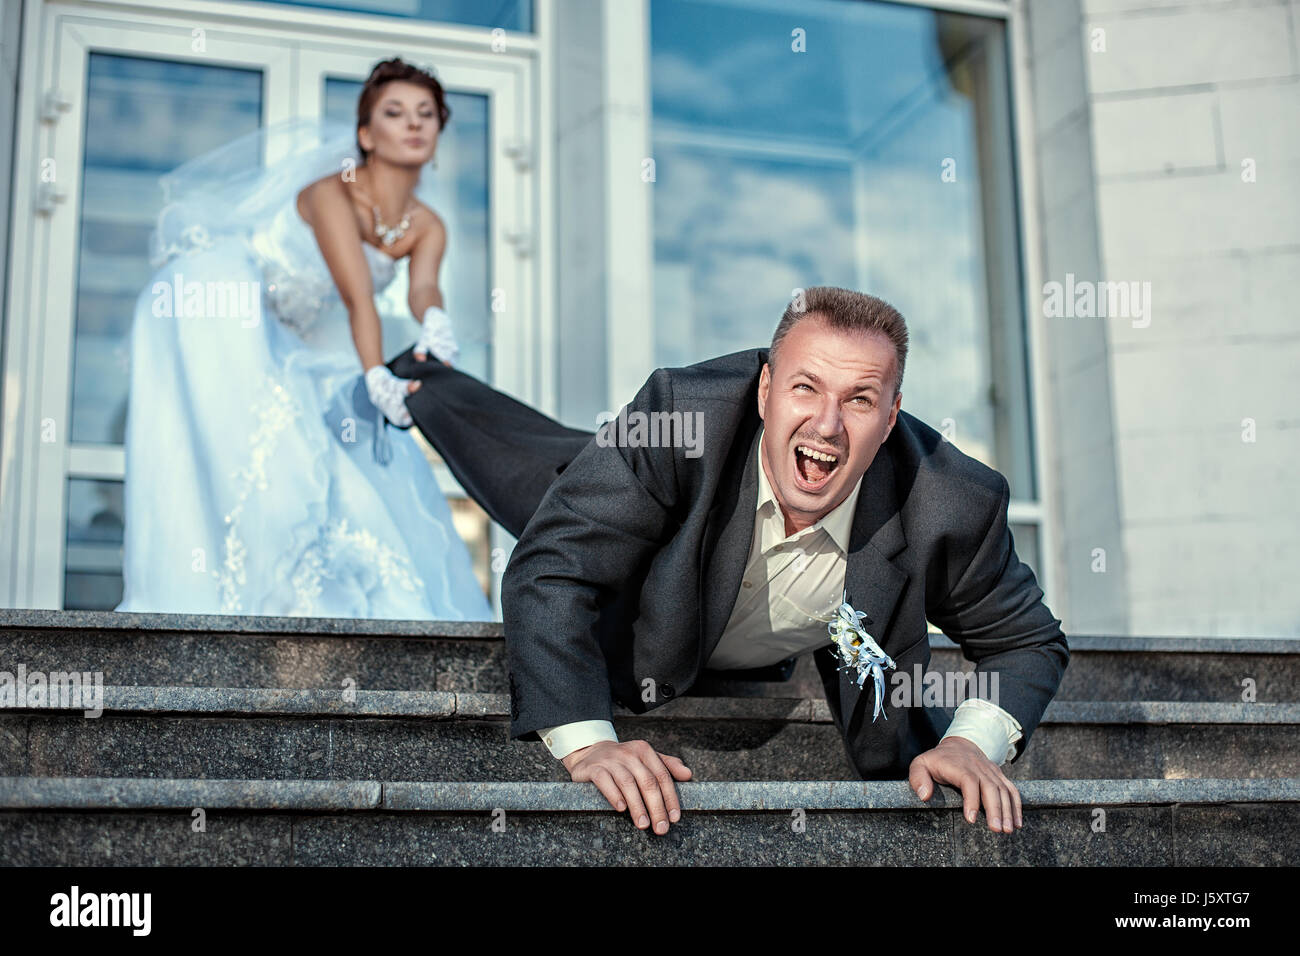 Bride leg pulls groom at the wedding. Stock Photo